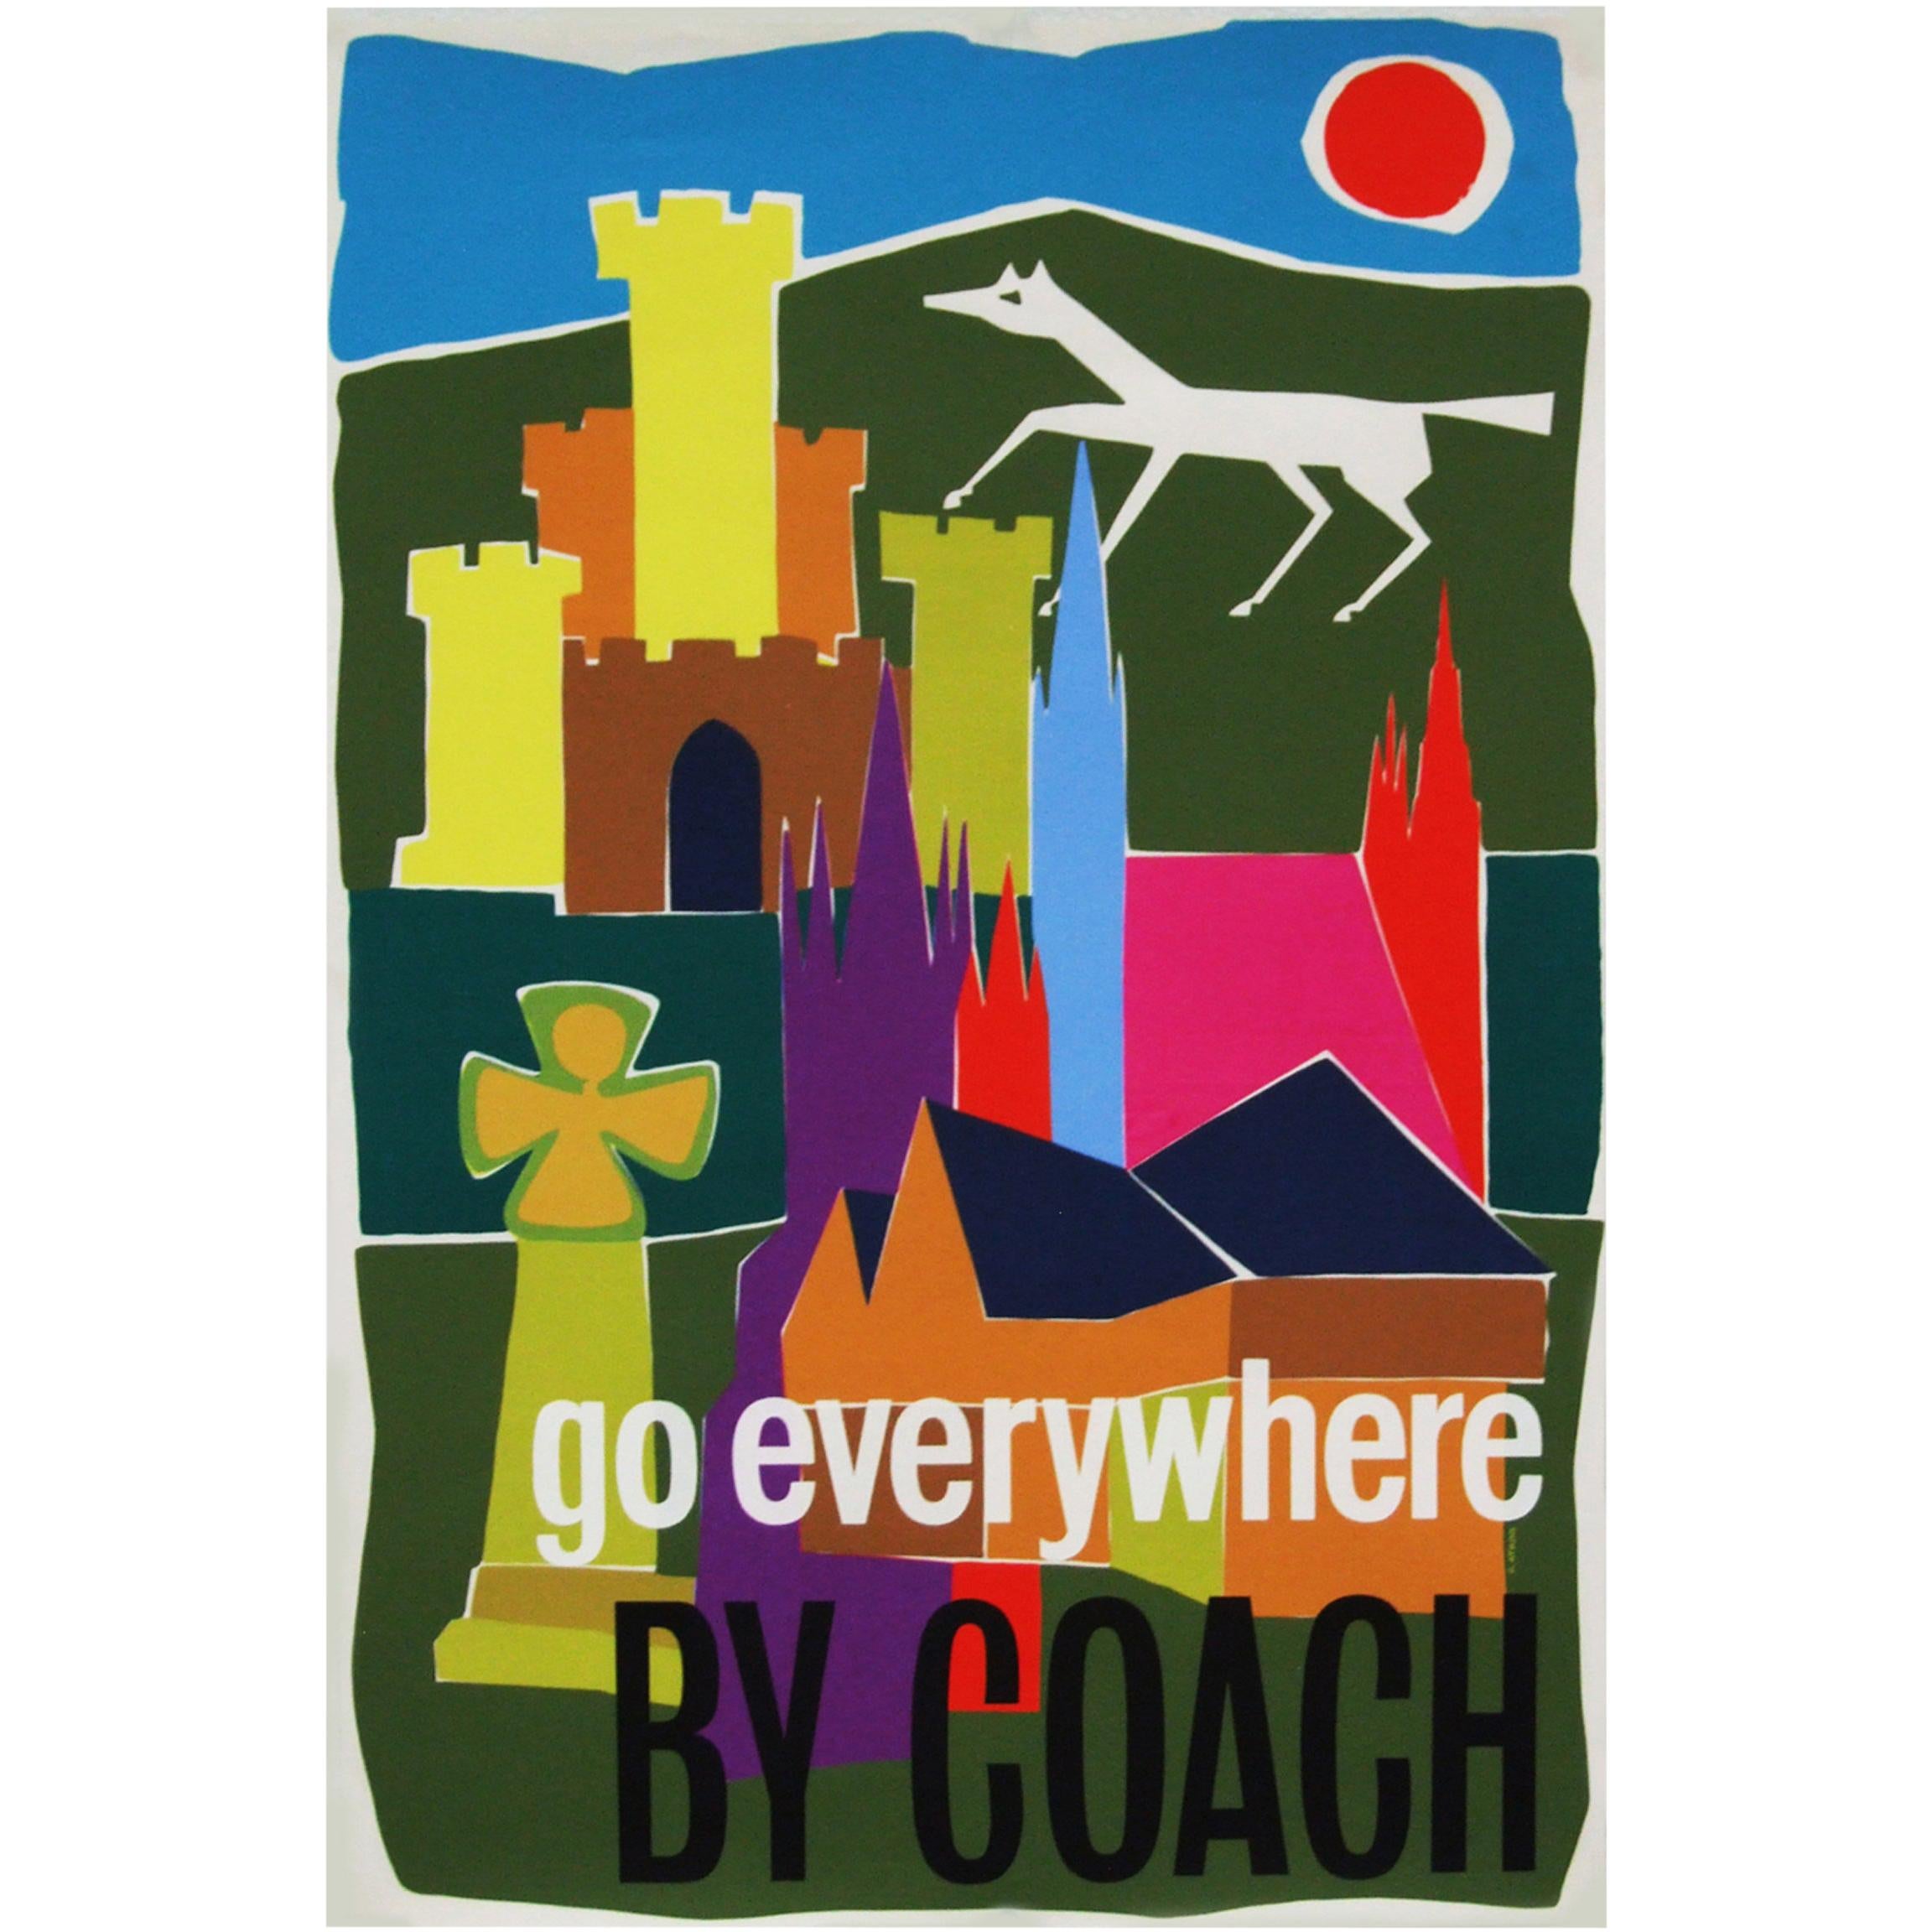 1960s British Coach Travel Poster Pop Art Illustration Design